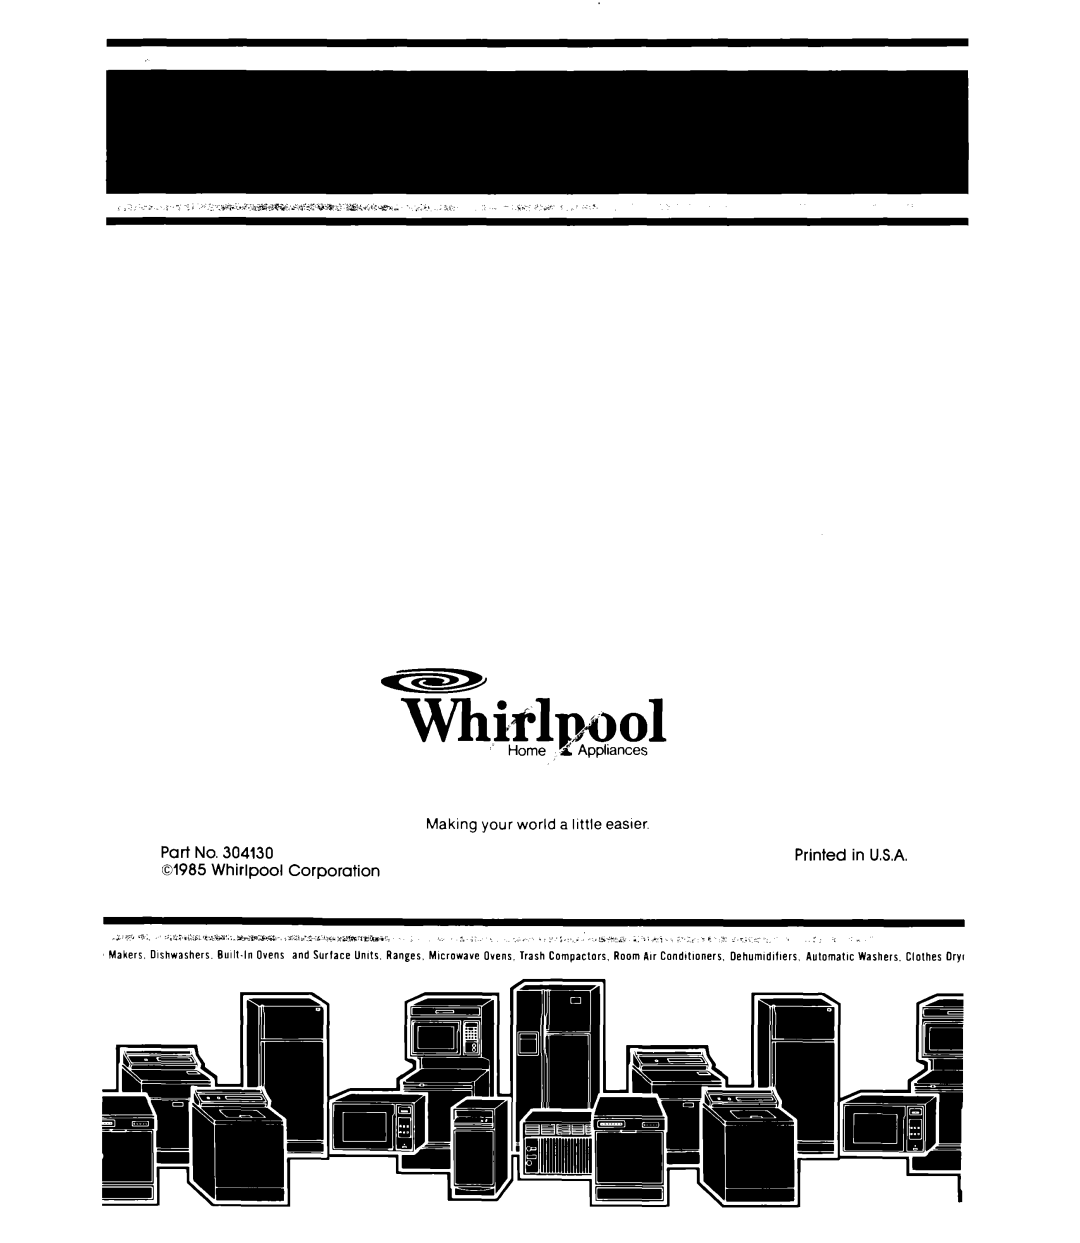 Whirlpool DP3840XP manual whitflpBool, Whirlpool, Corporation 